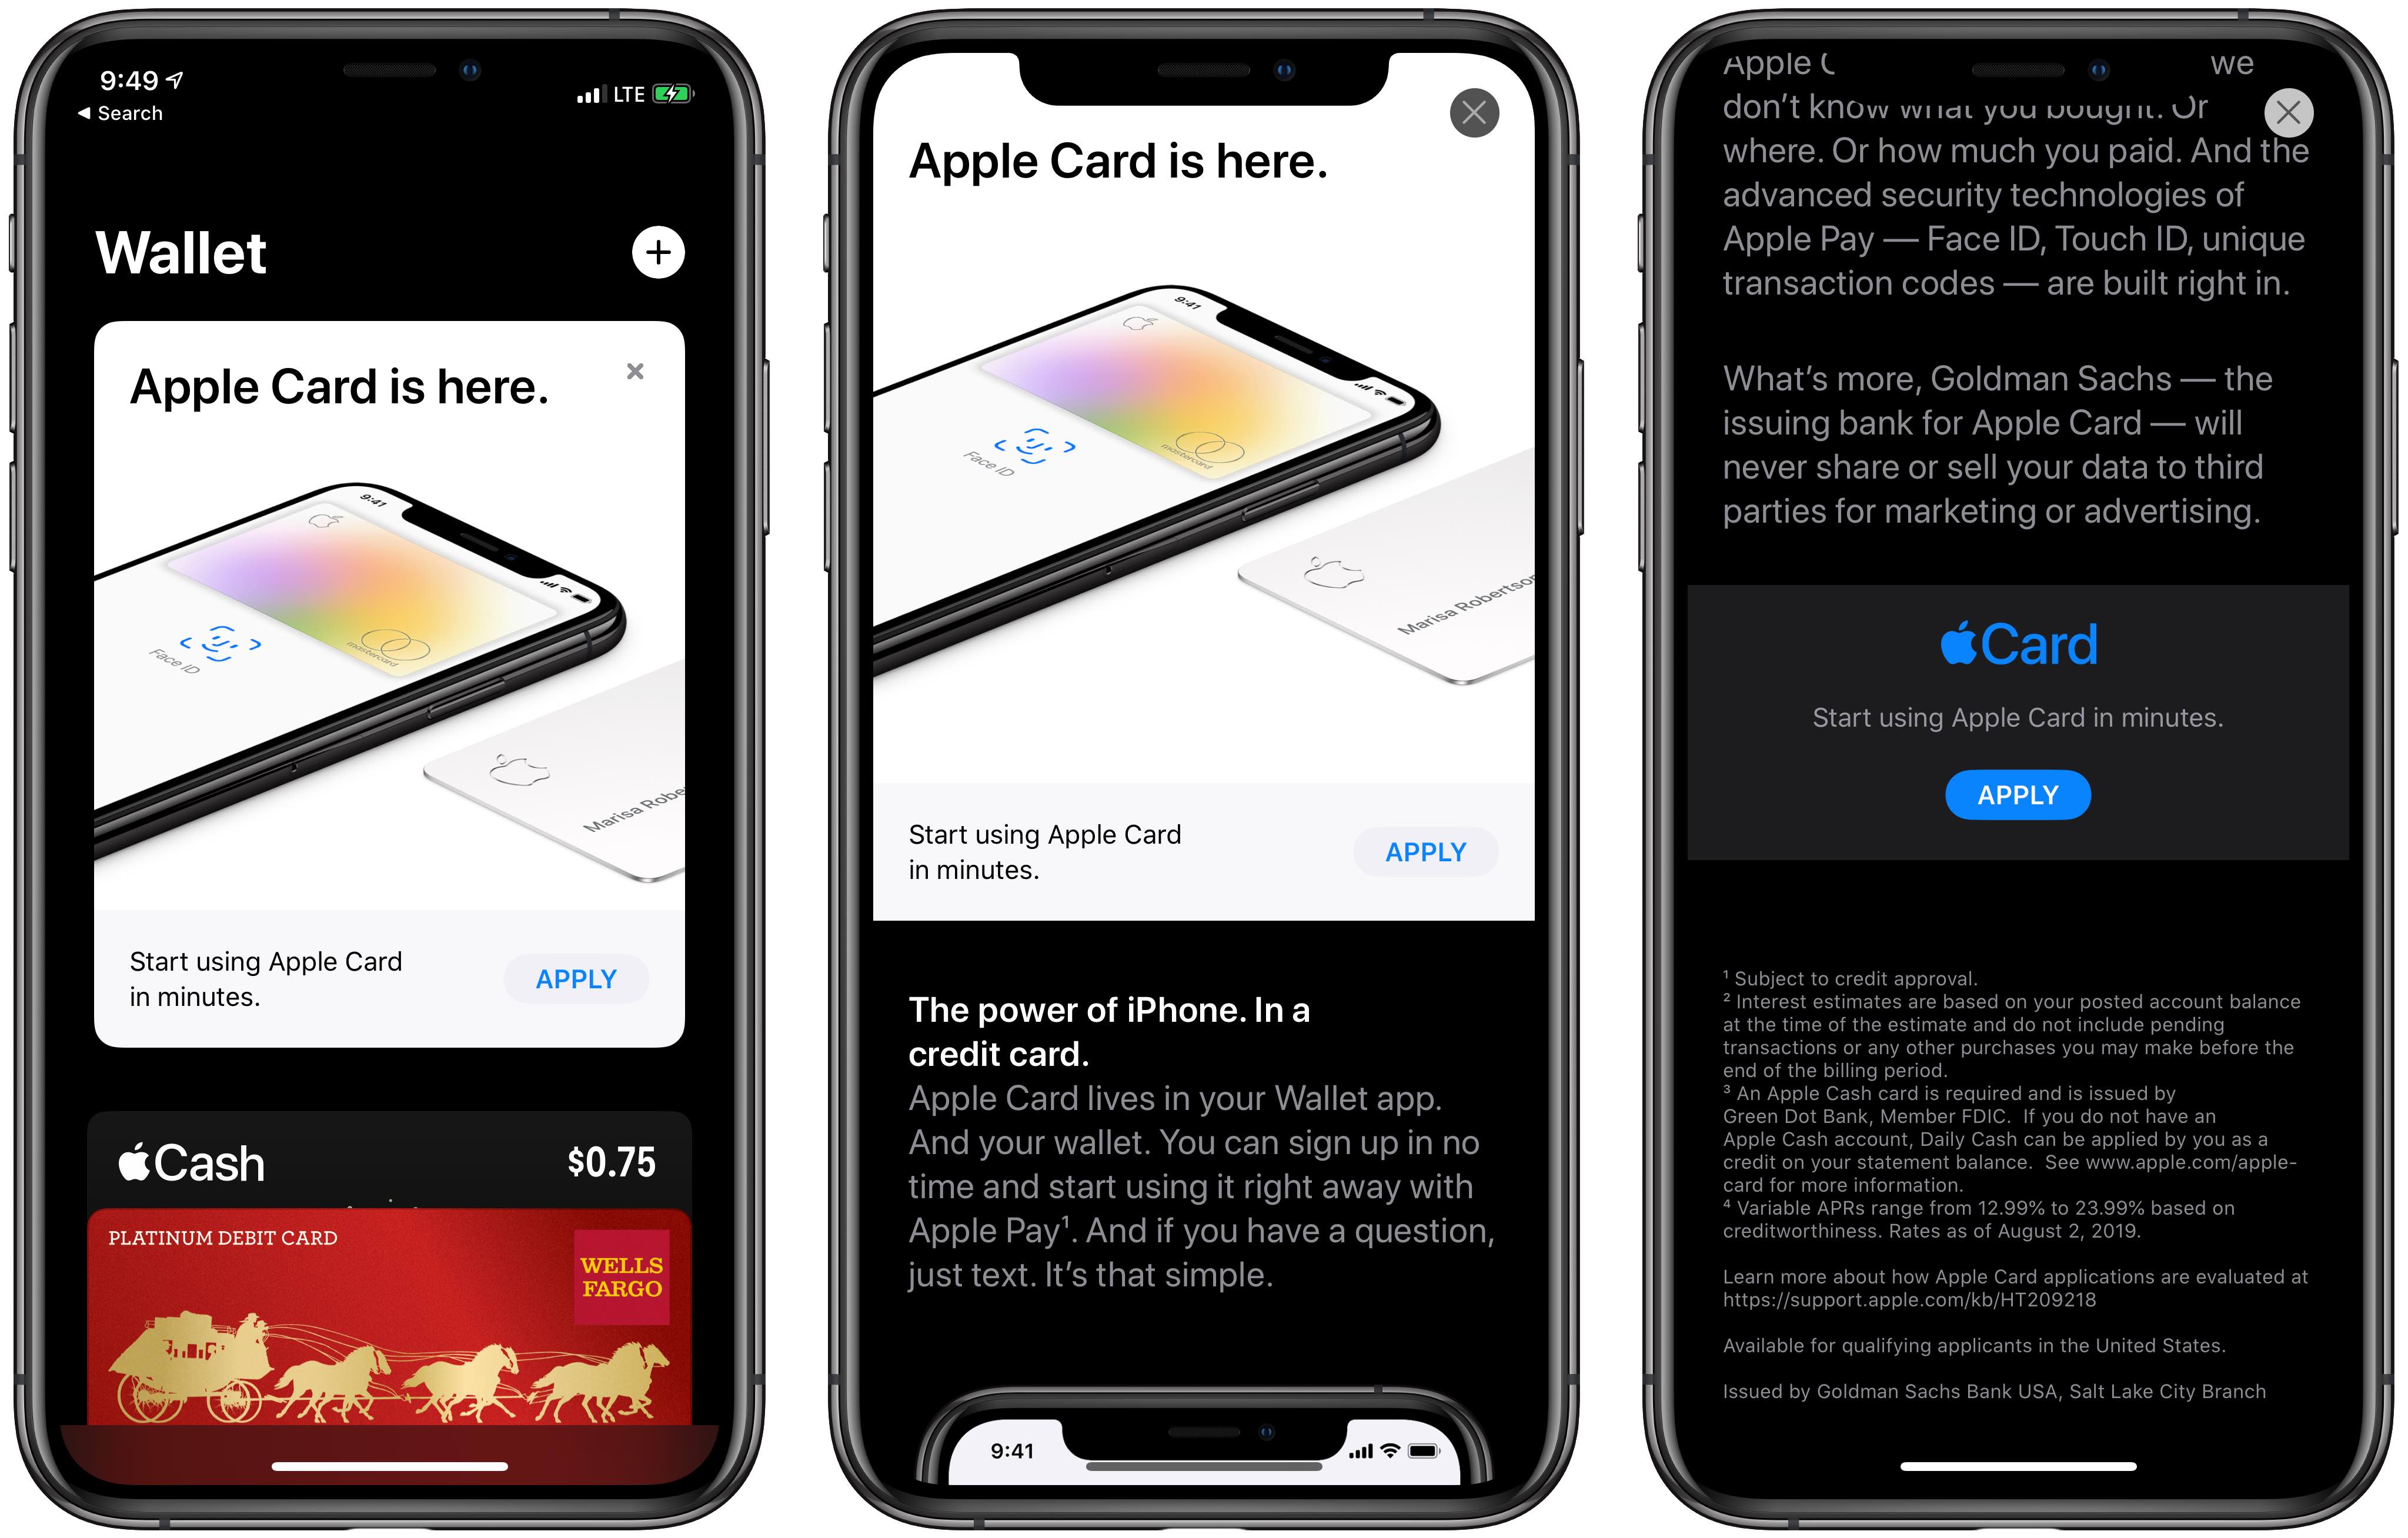 Apple promoting Apple Card in Wallet app